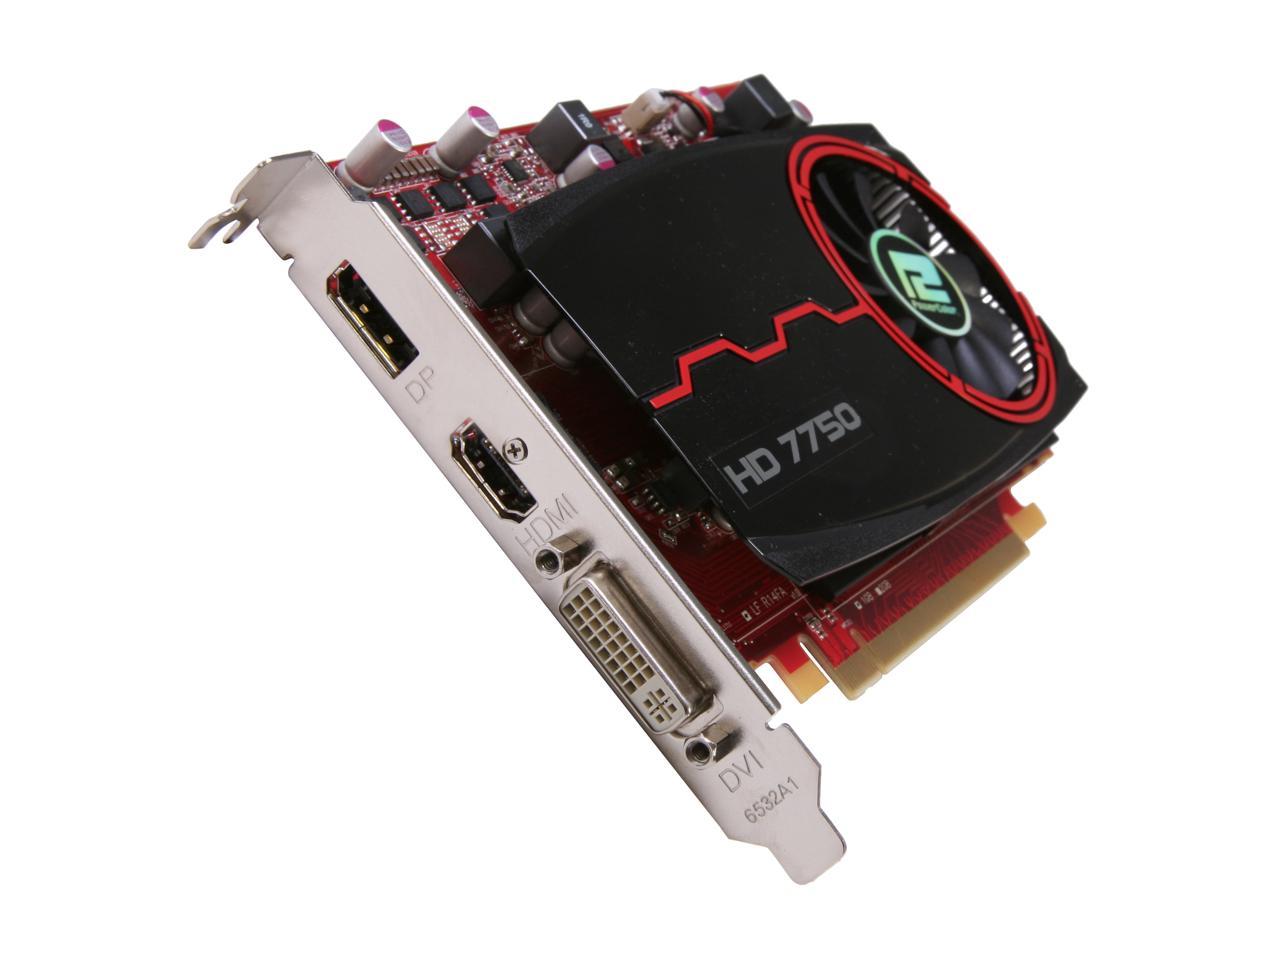 Make dinner transmission Tips PowerColor Radeon HD 7750 Video Card AX7750 1GBD5-DH - Newegg.com